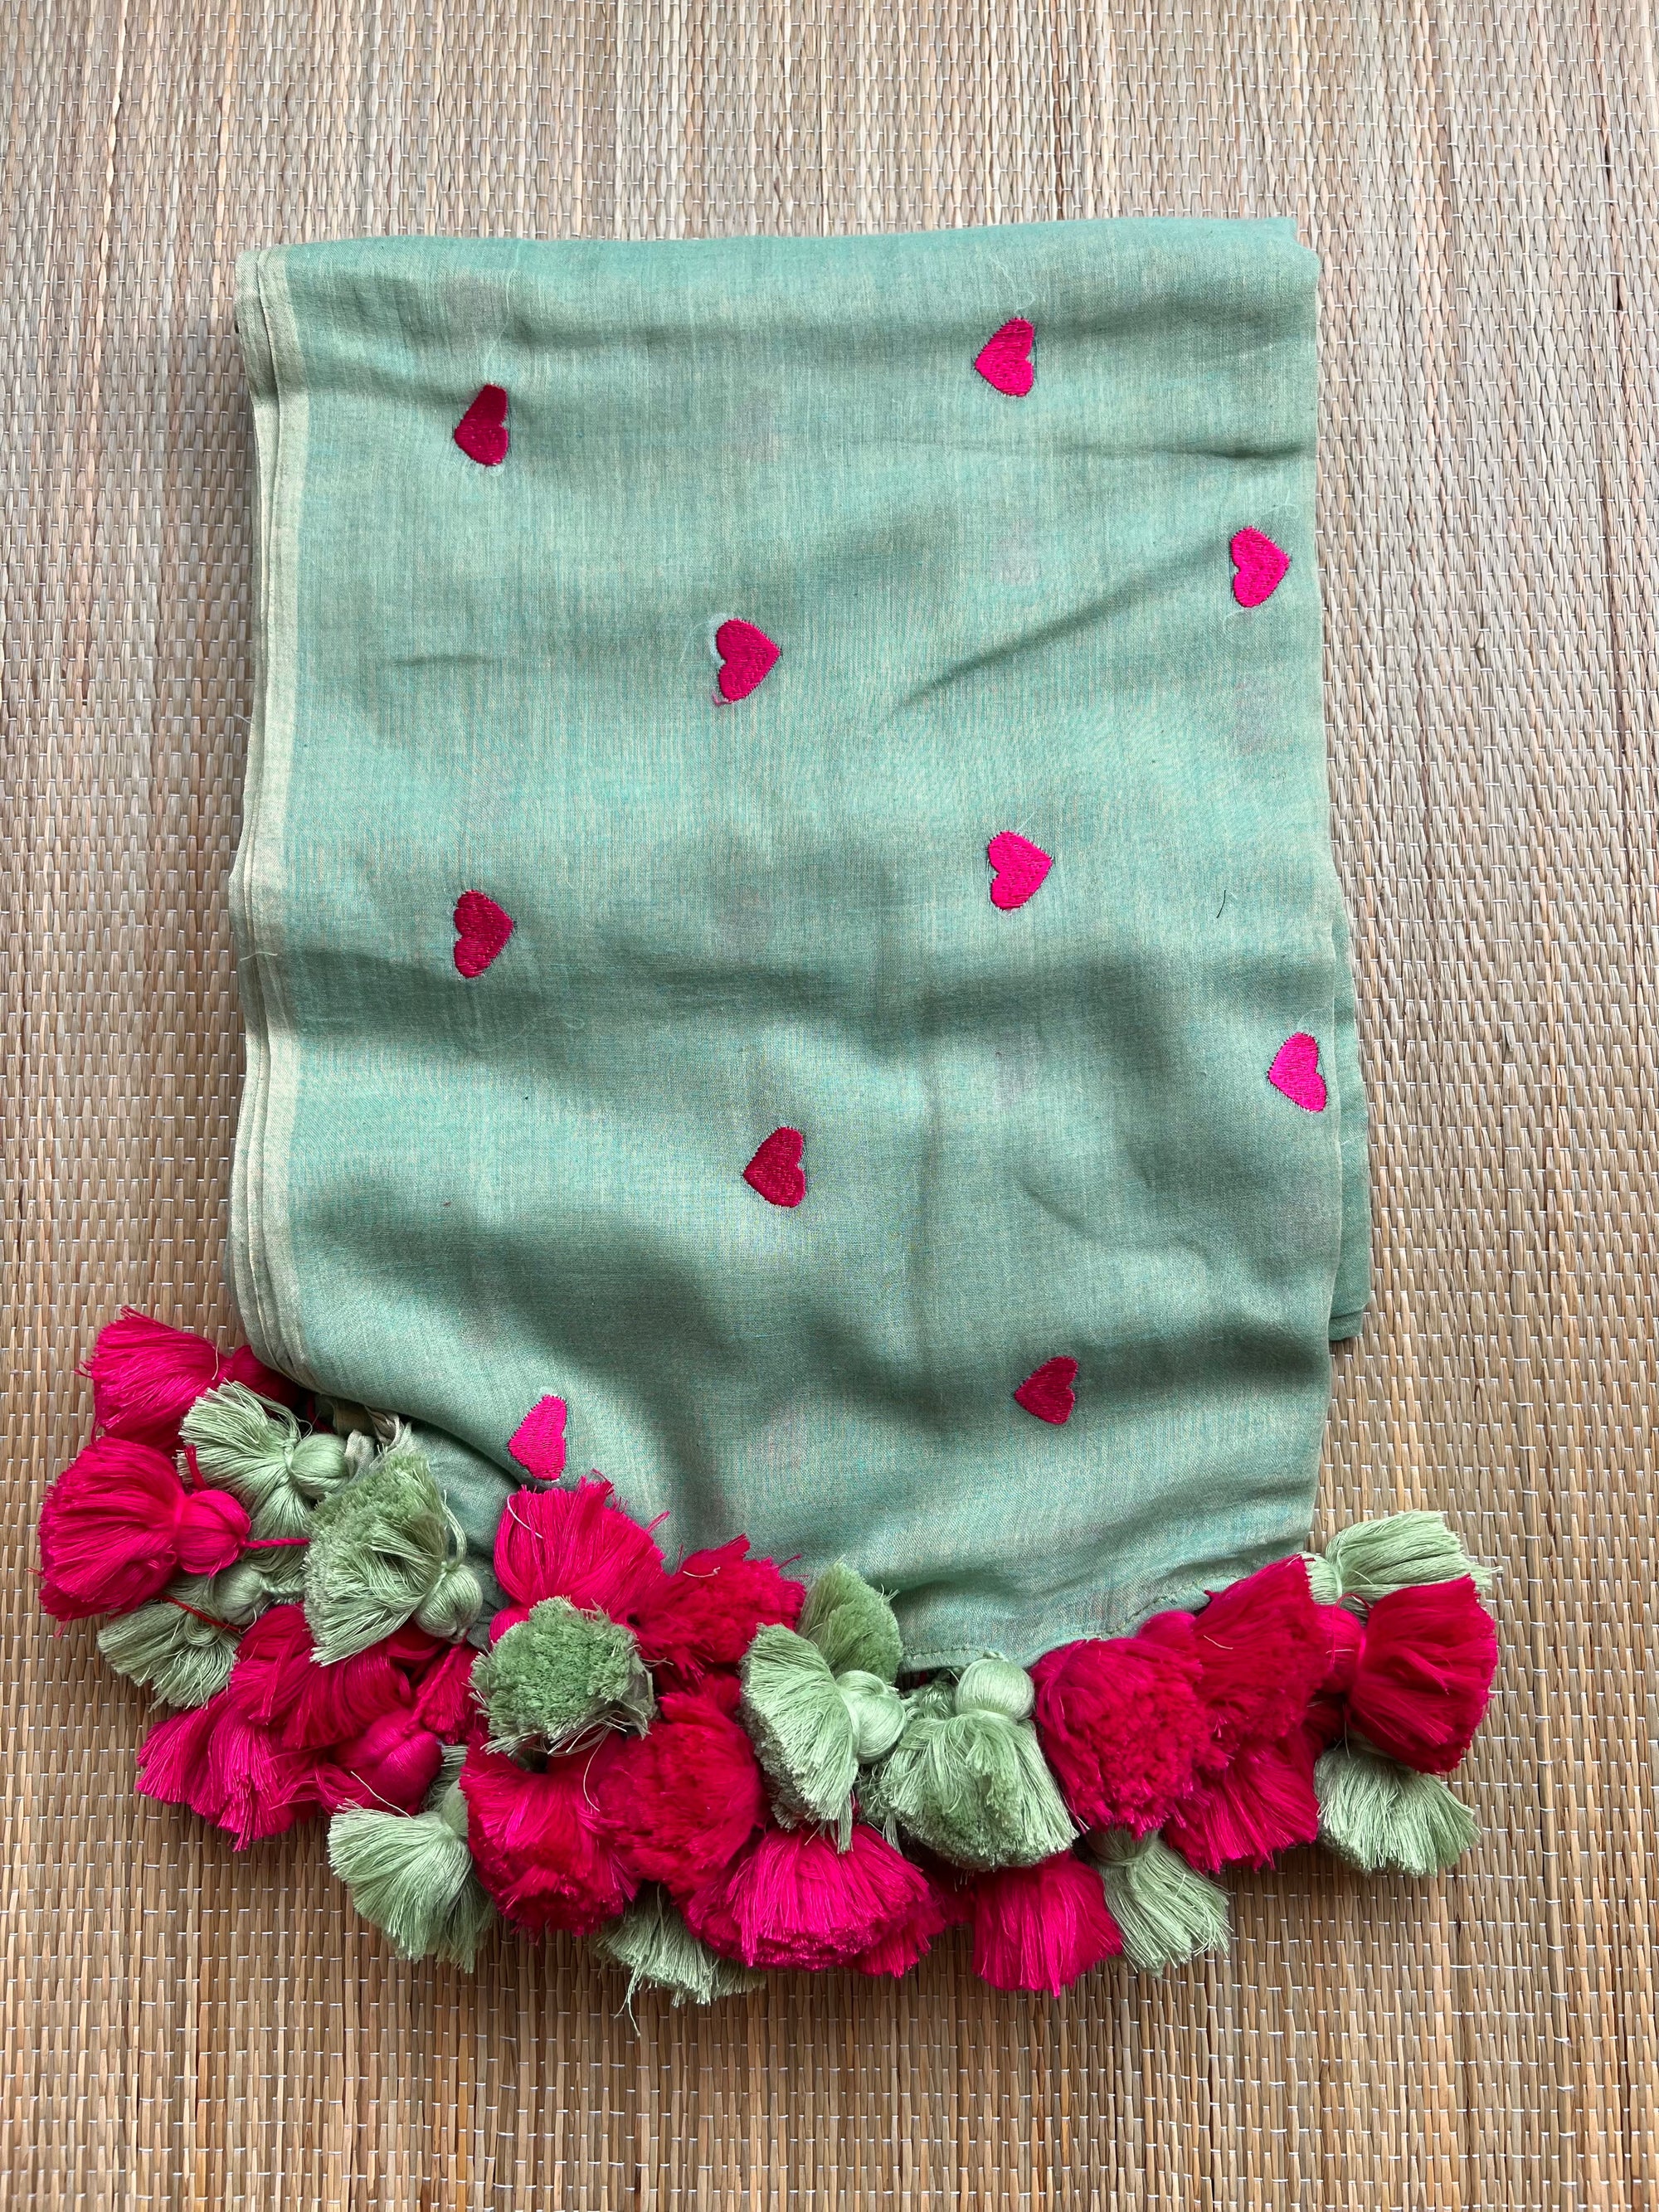 Love love embroidery with big pom pom saree